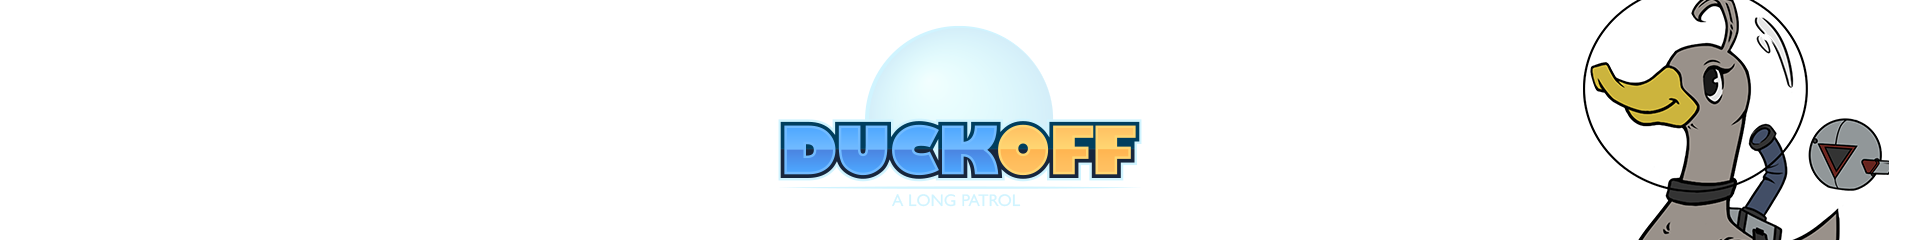 DuckOff - A long patrol